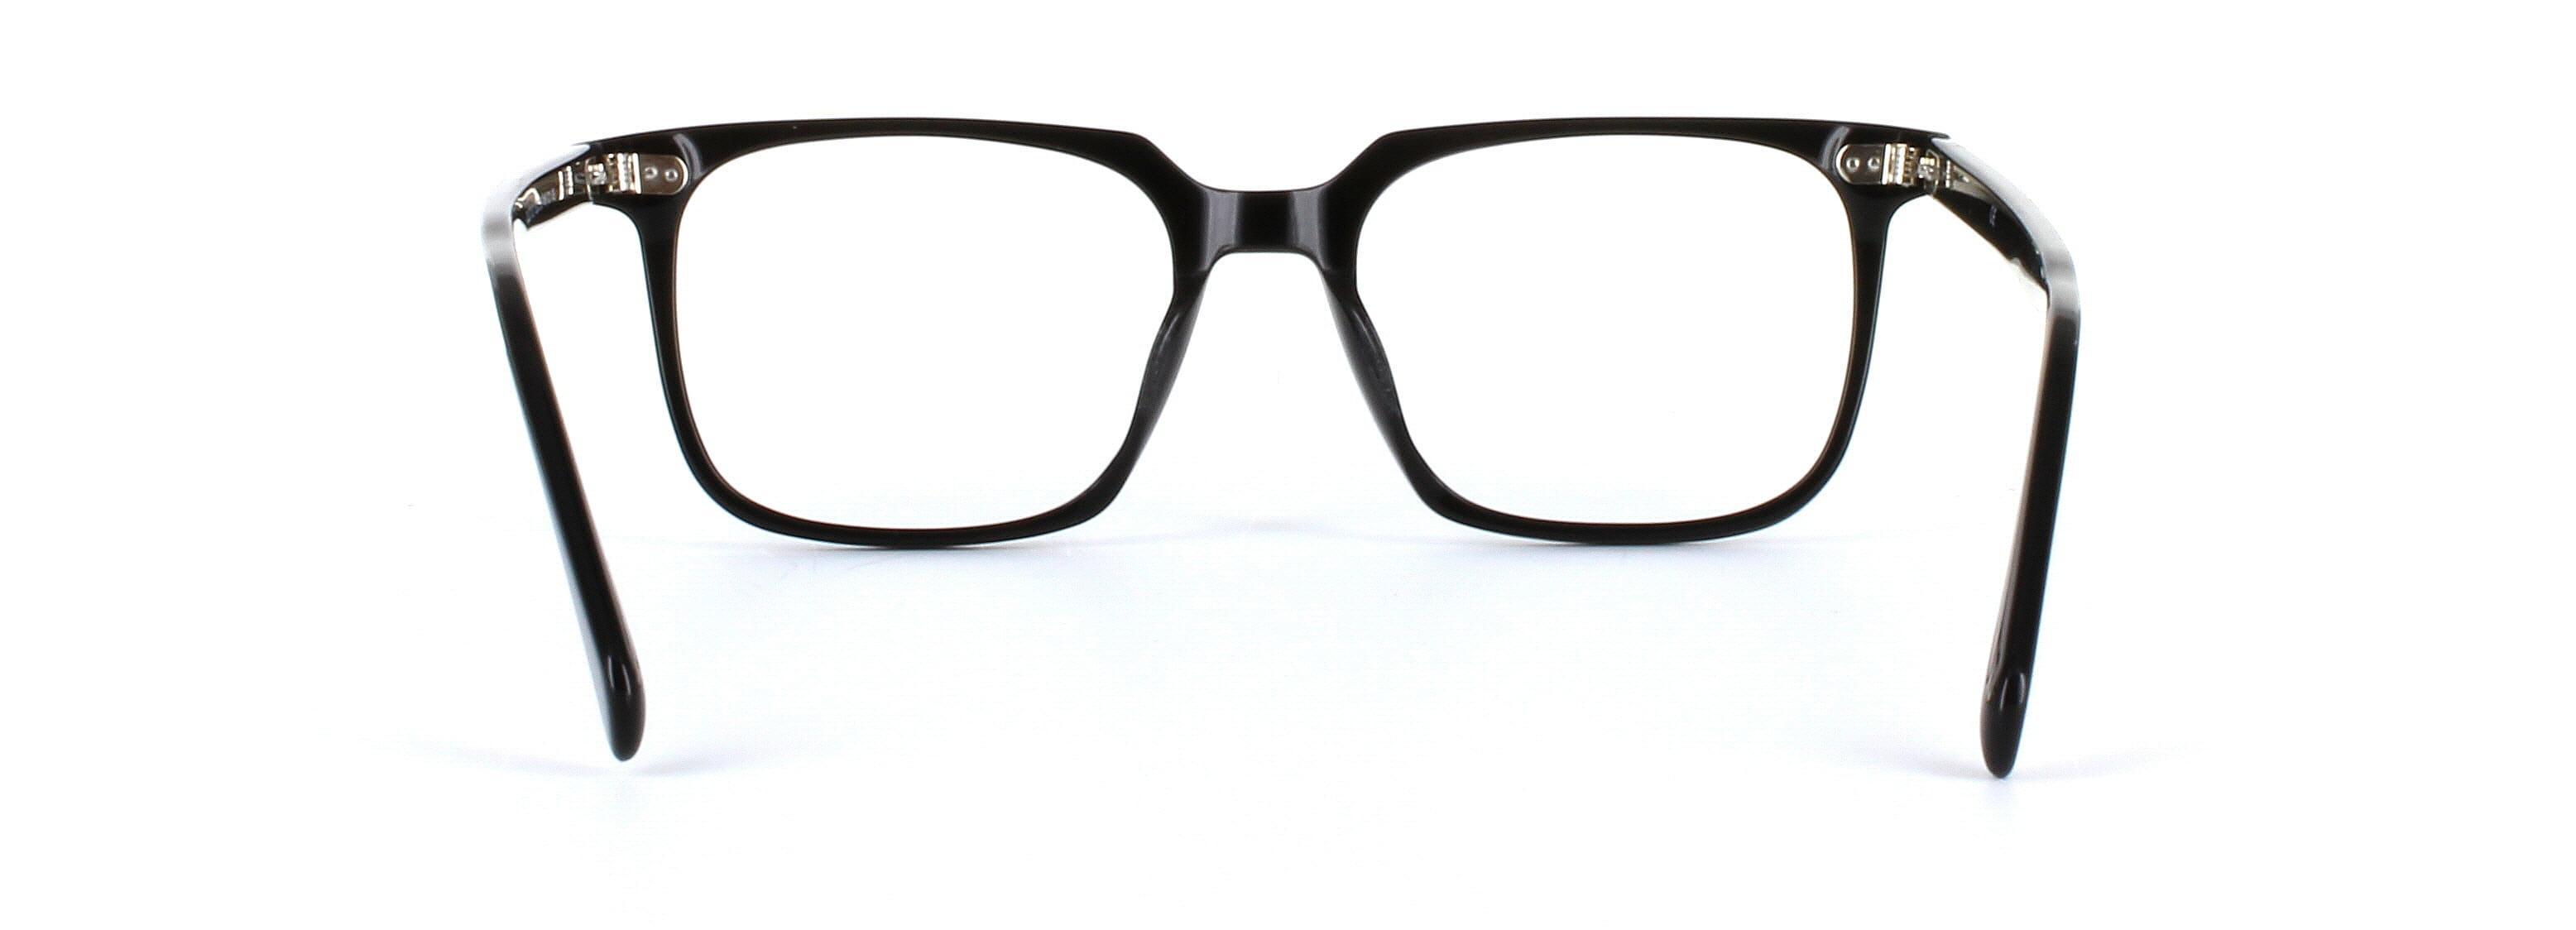 Chilli Black Full Rim Acetate Glasses - Image View 3